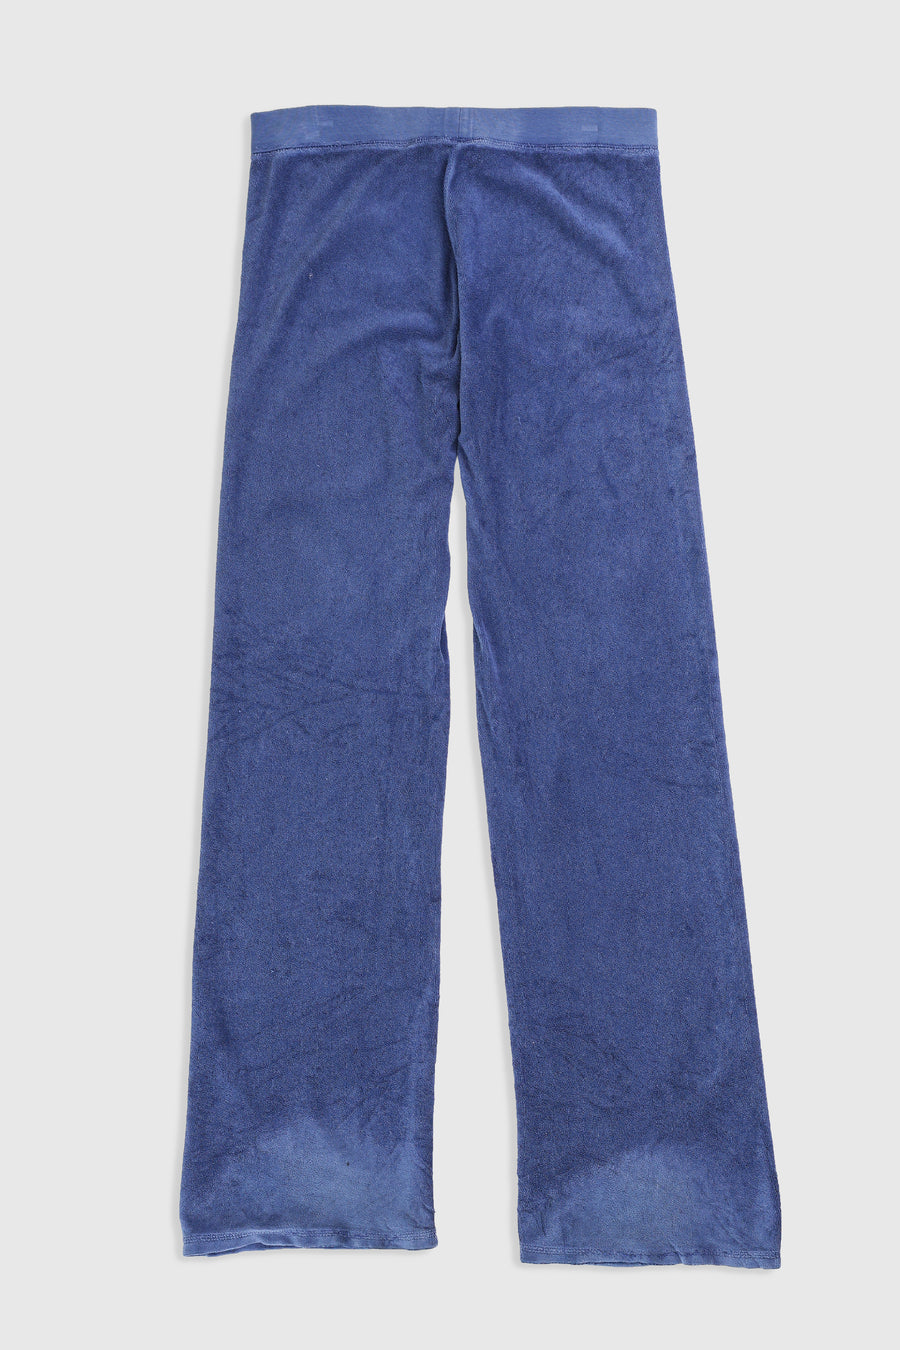 Vintage Juicy Couture Terrycloth Pants